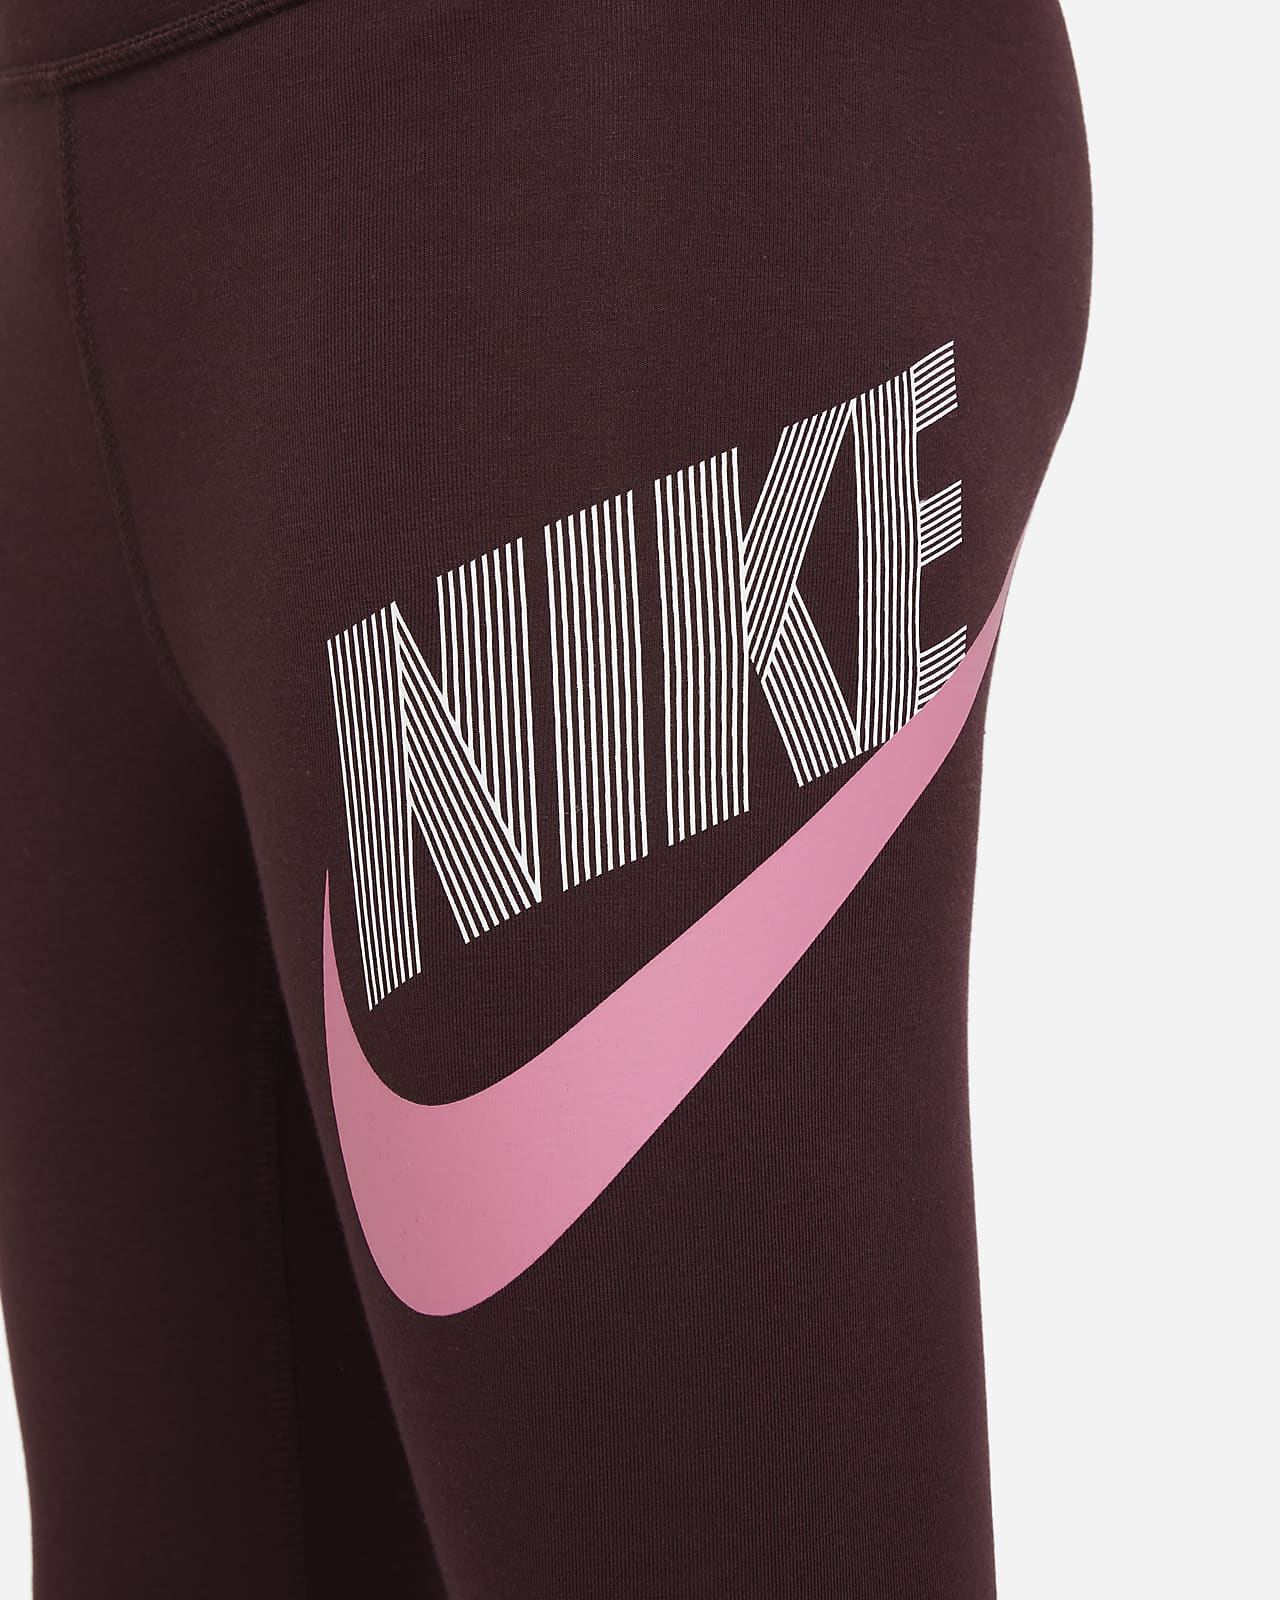 Nike - Ensemble legging sport rose fille